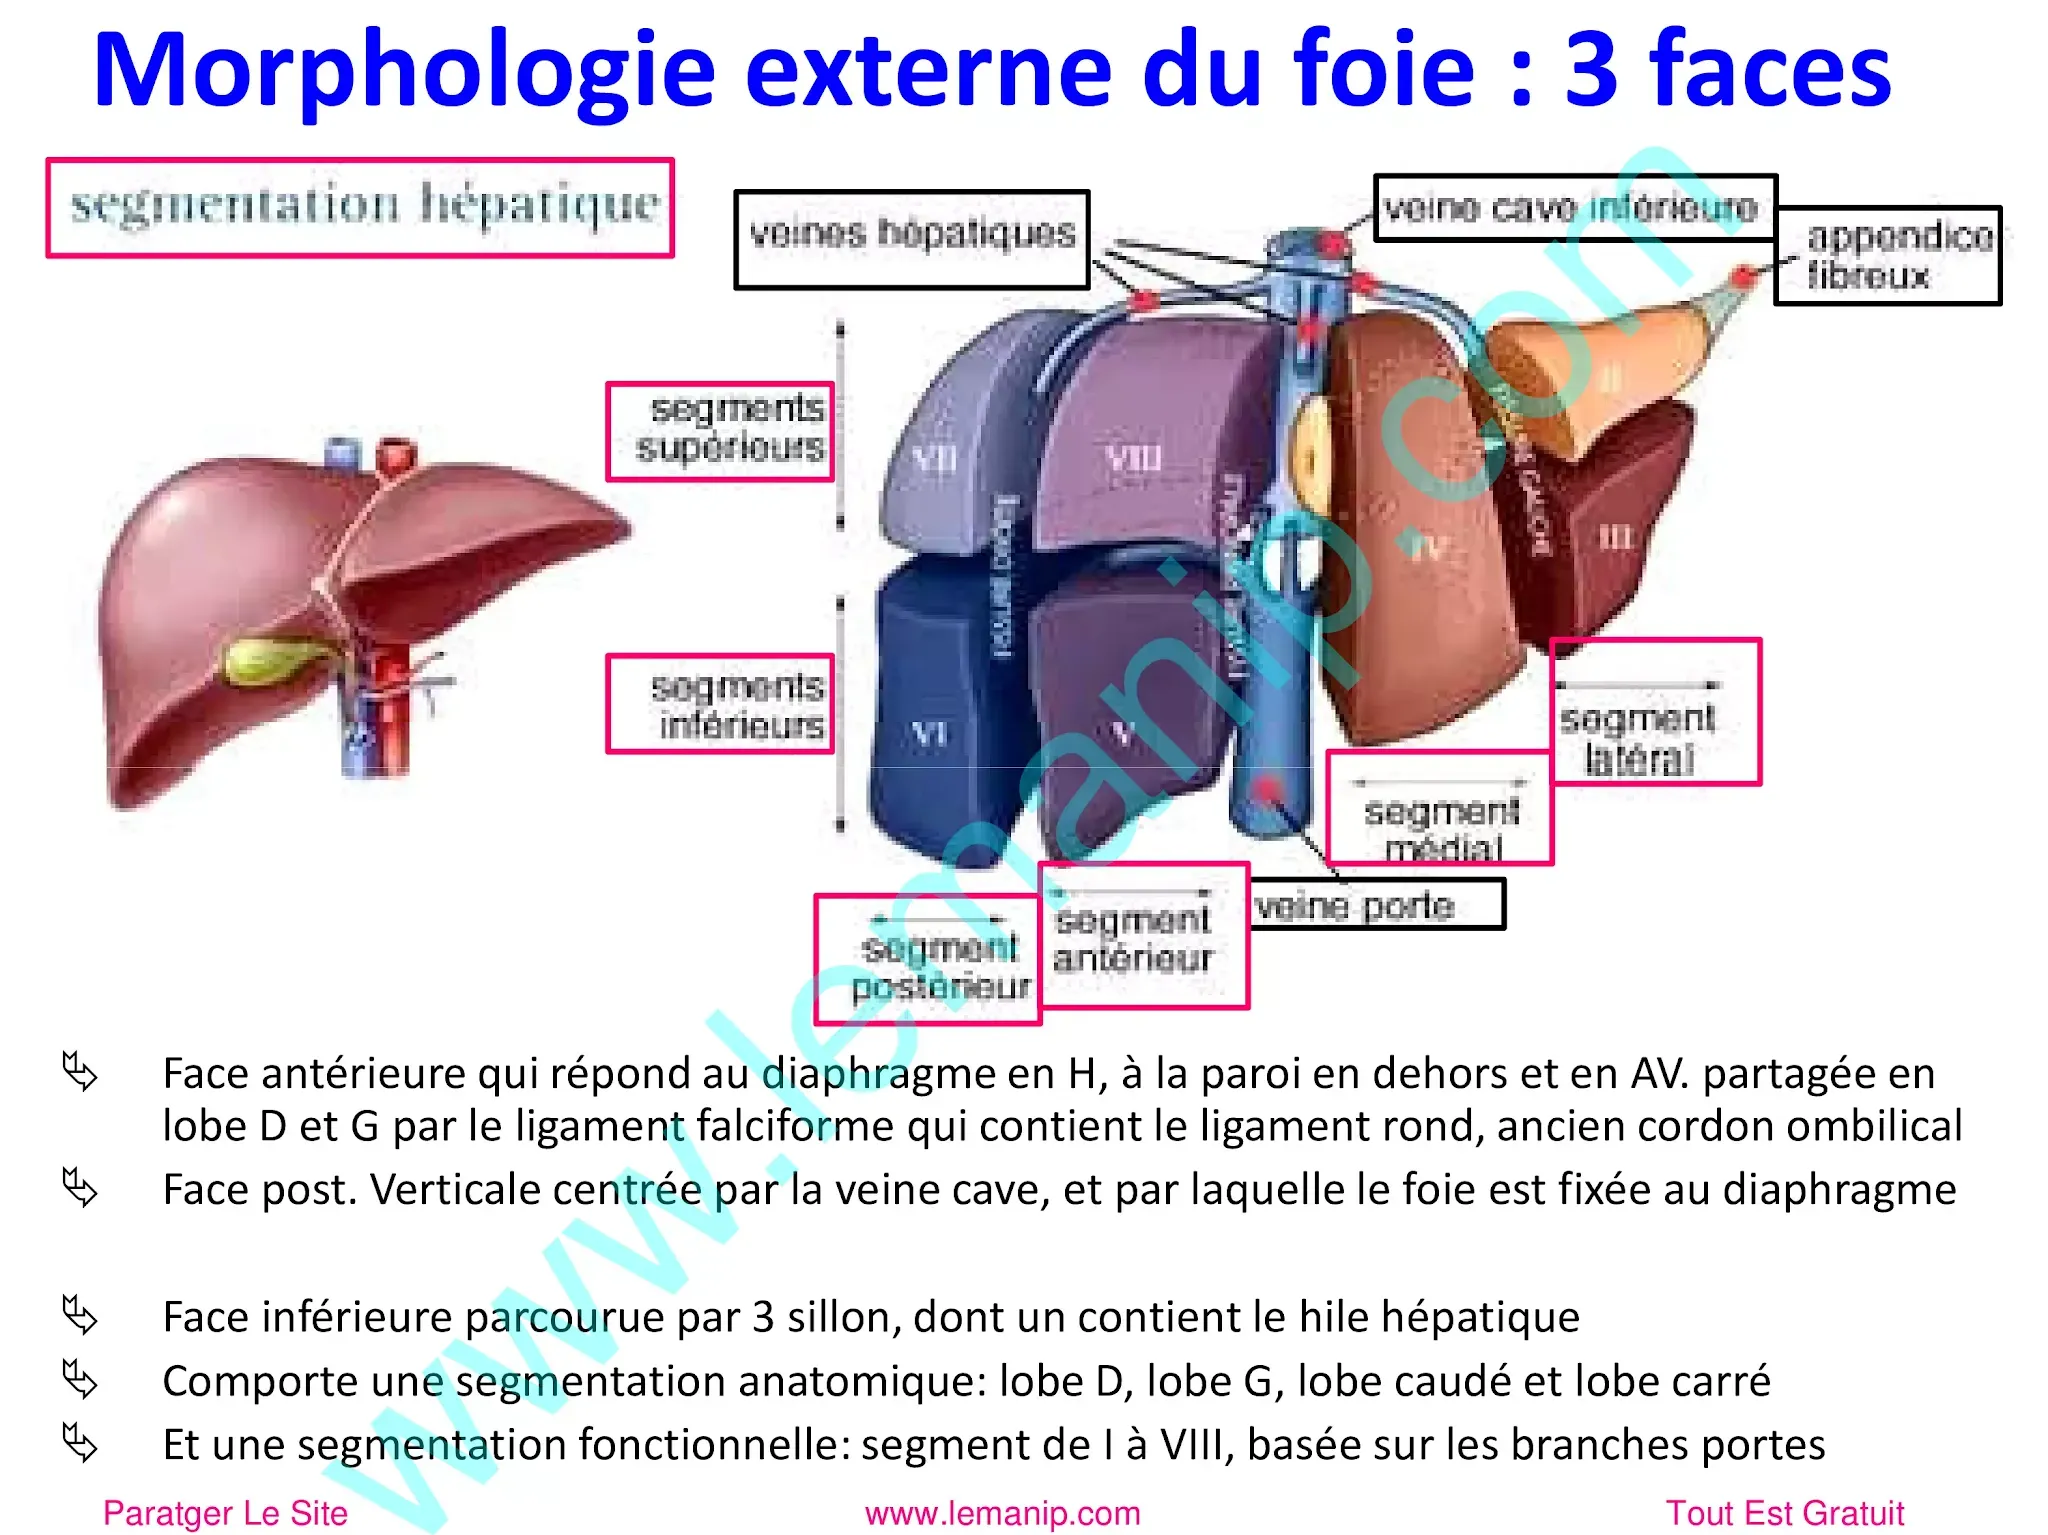 Morphologie externe du foie